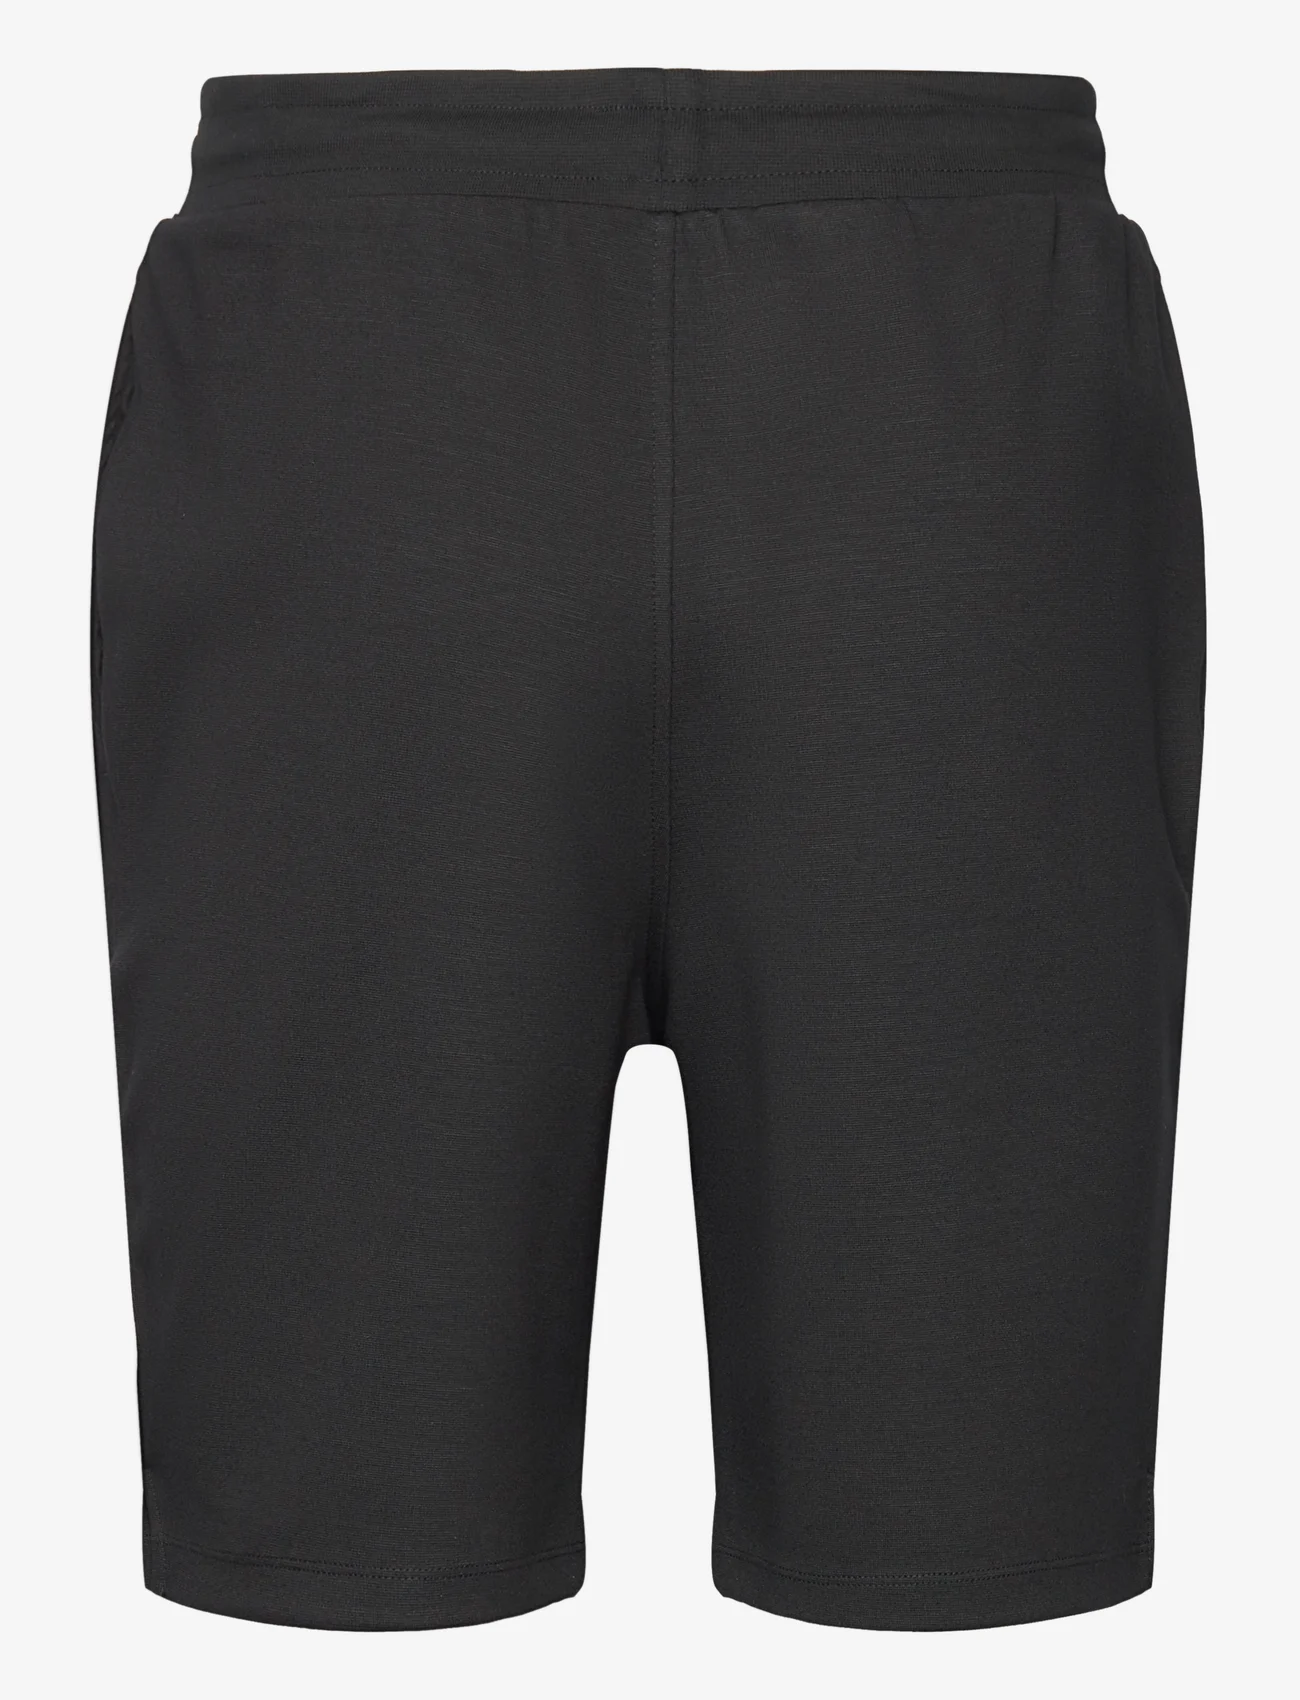 Lyle & Scott Sport - Fly Fleece Shorts - sports shorts - z865 jet black - 1